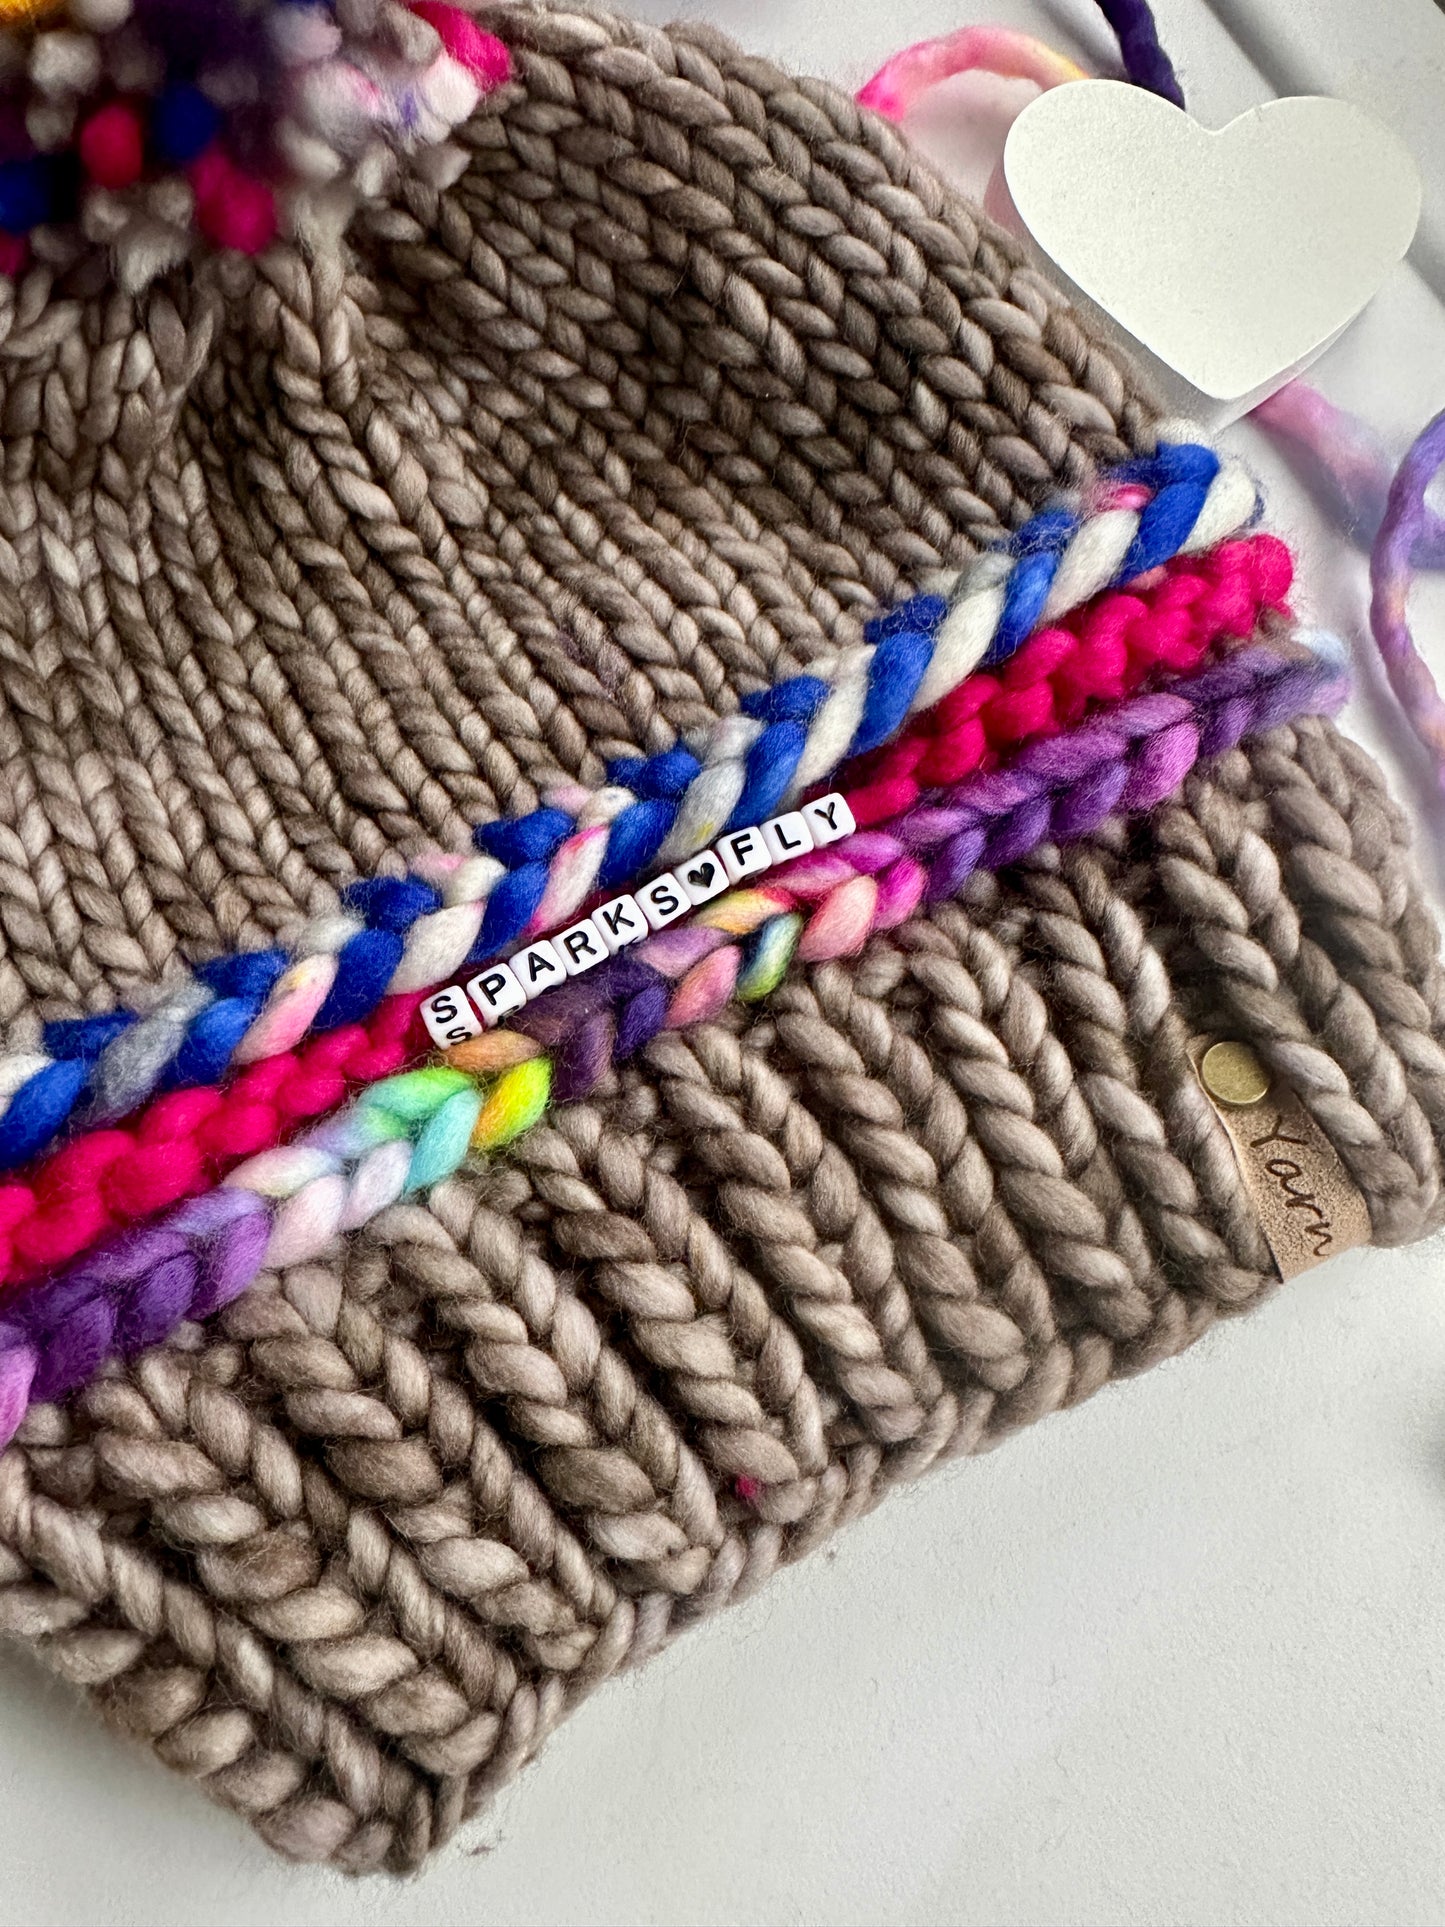 Friendship bracelet merino wool knit hat with merino wool Pom